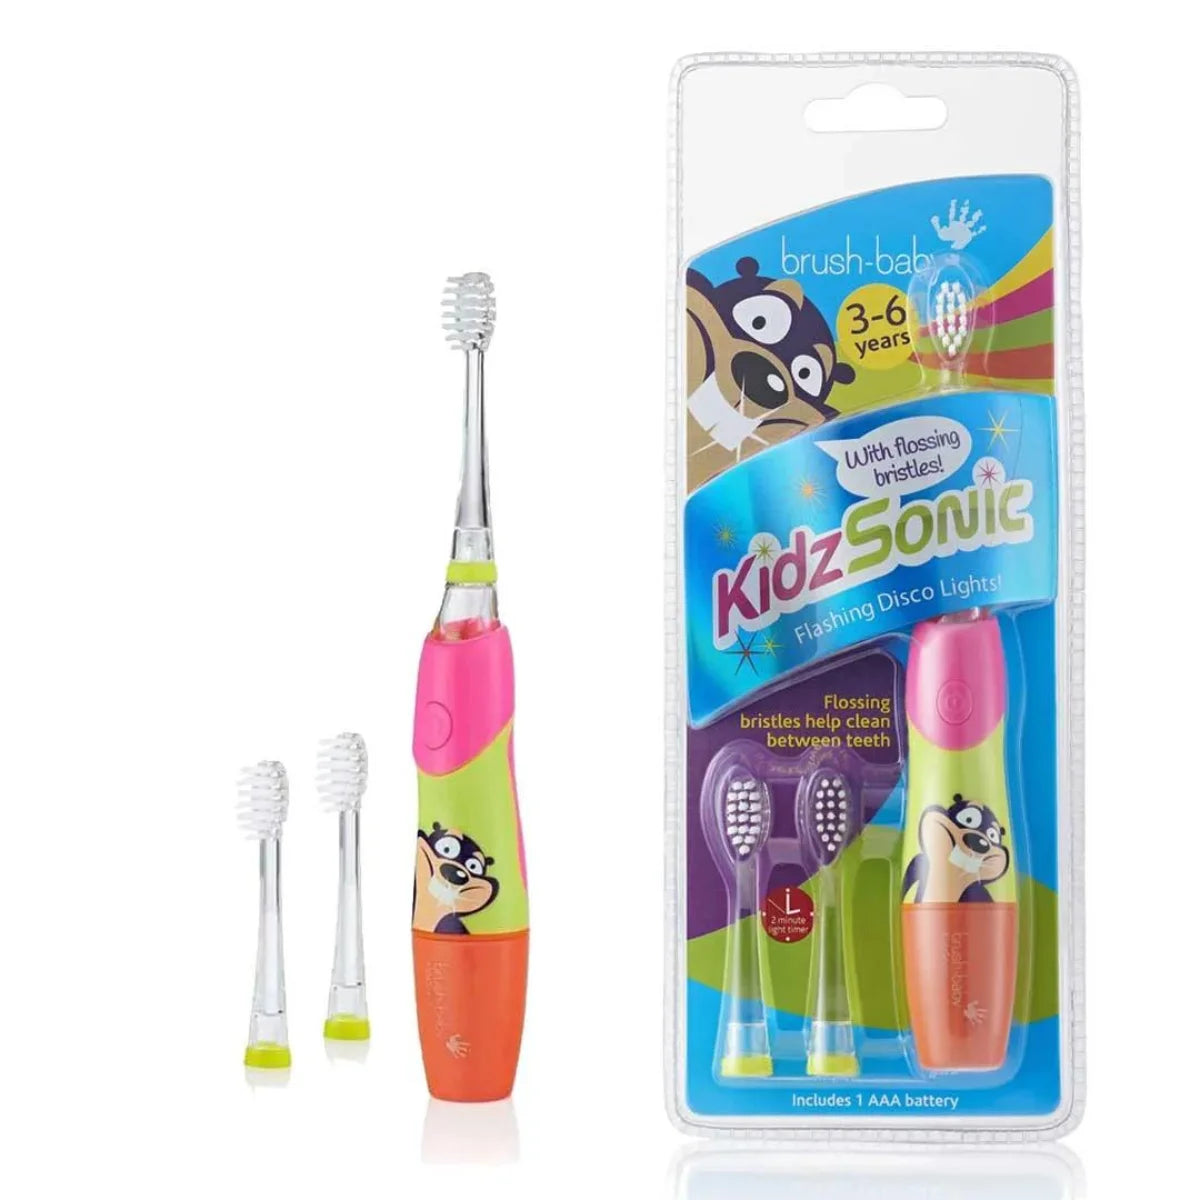 Pink Kids Sonic Electric Toothbrush